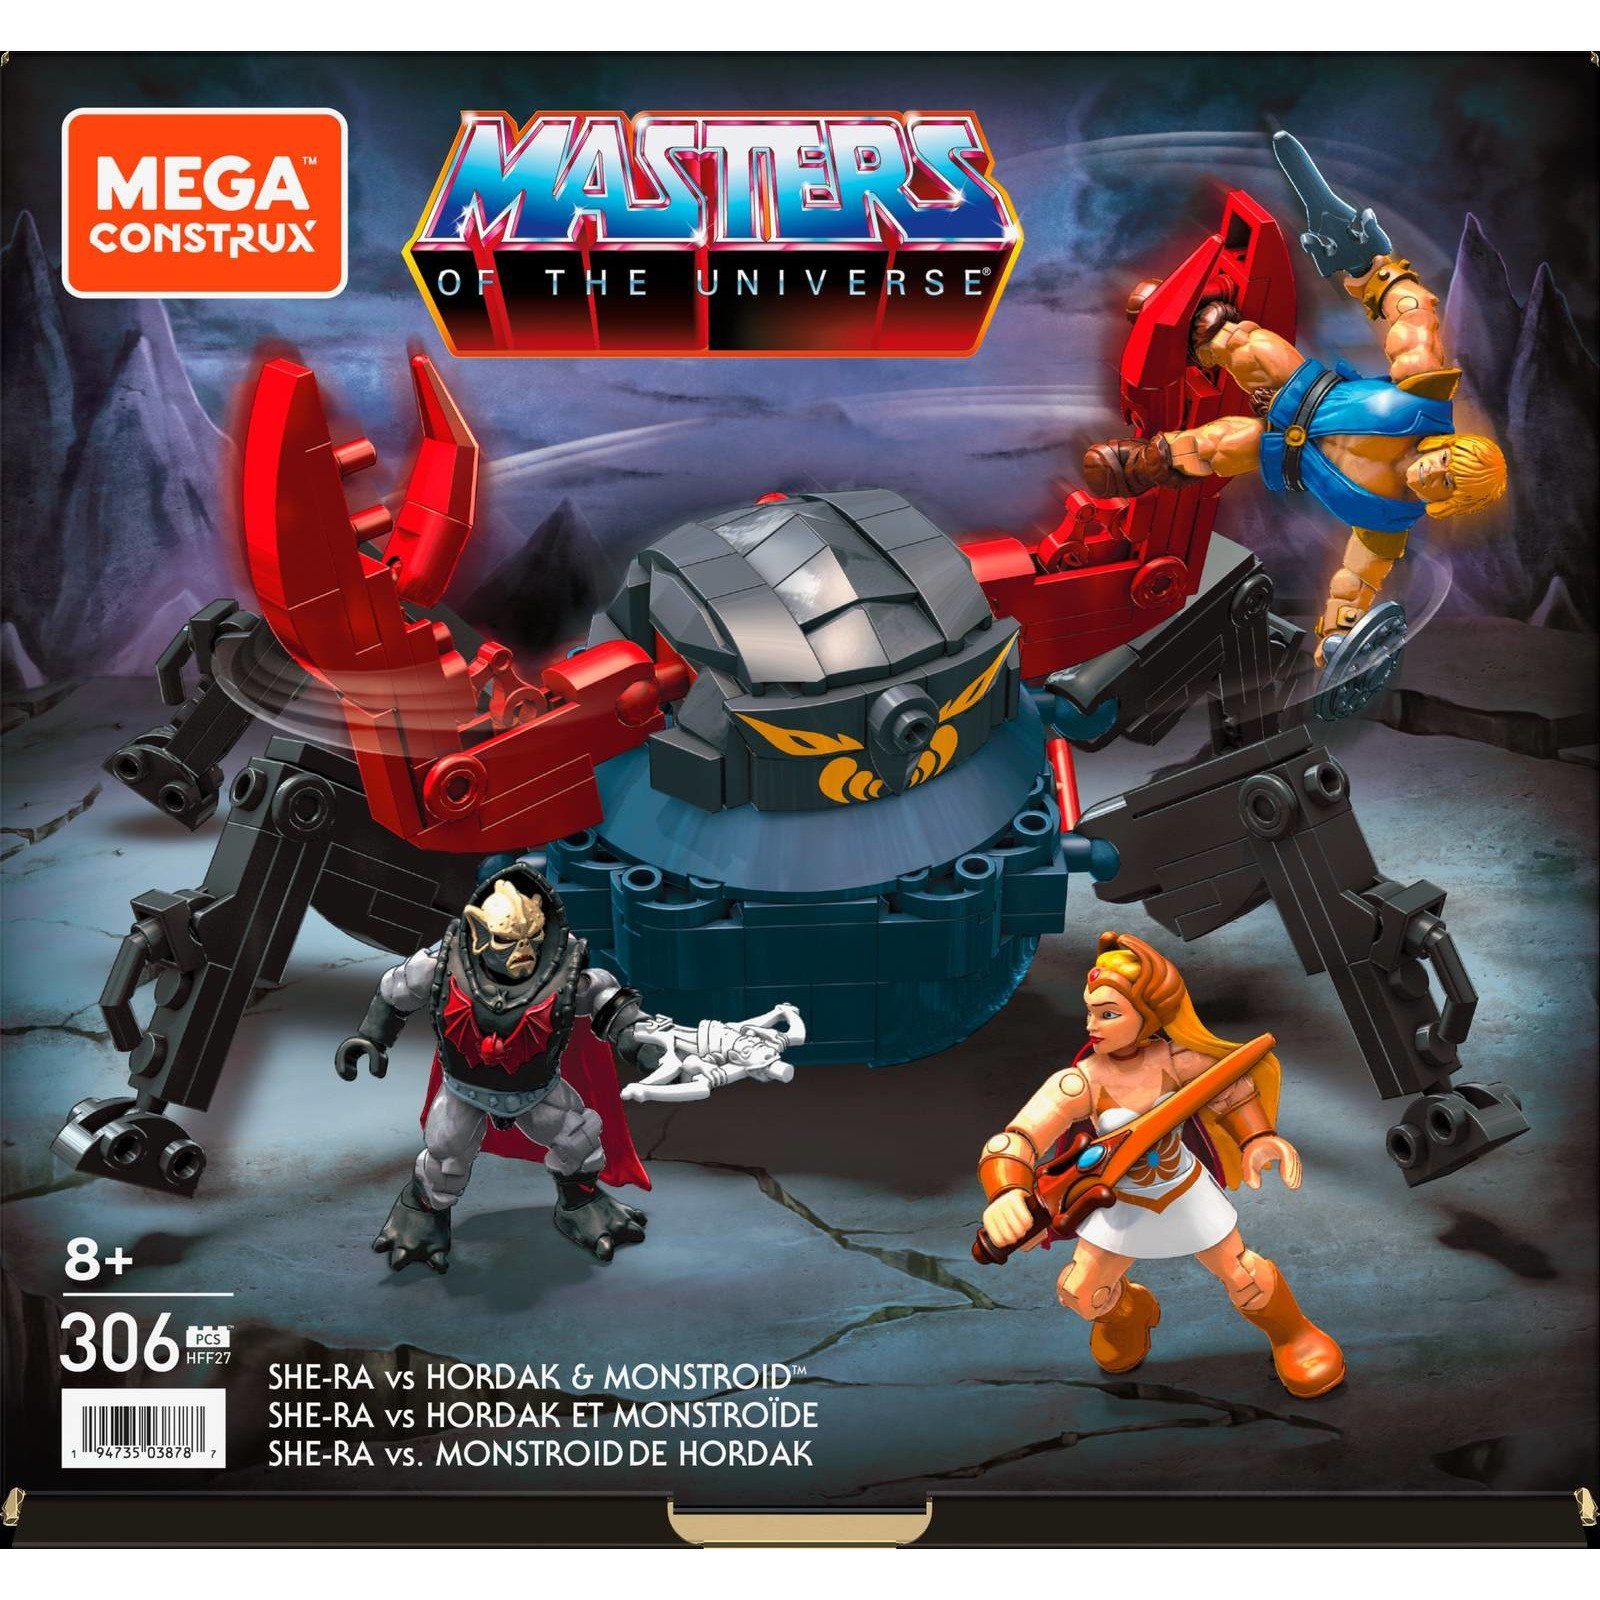 Masters Mega Origi, the (Actionfiguren) Universe Construx Spielbausteine Mattel of